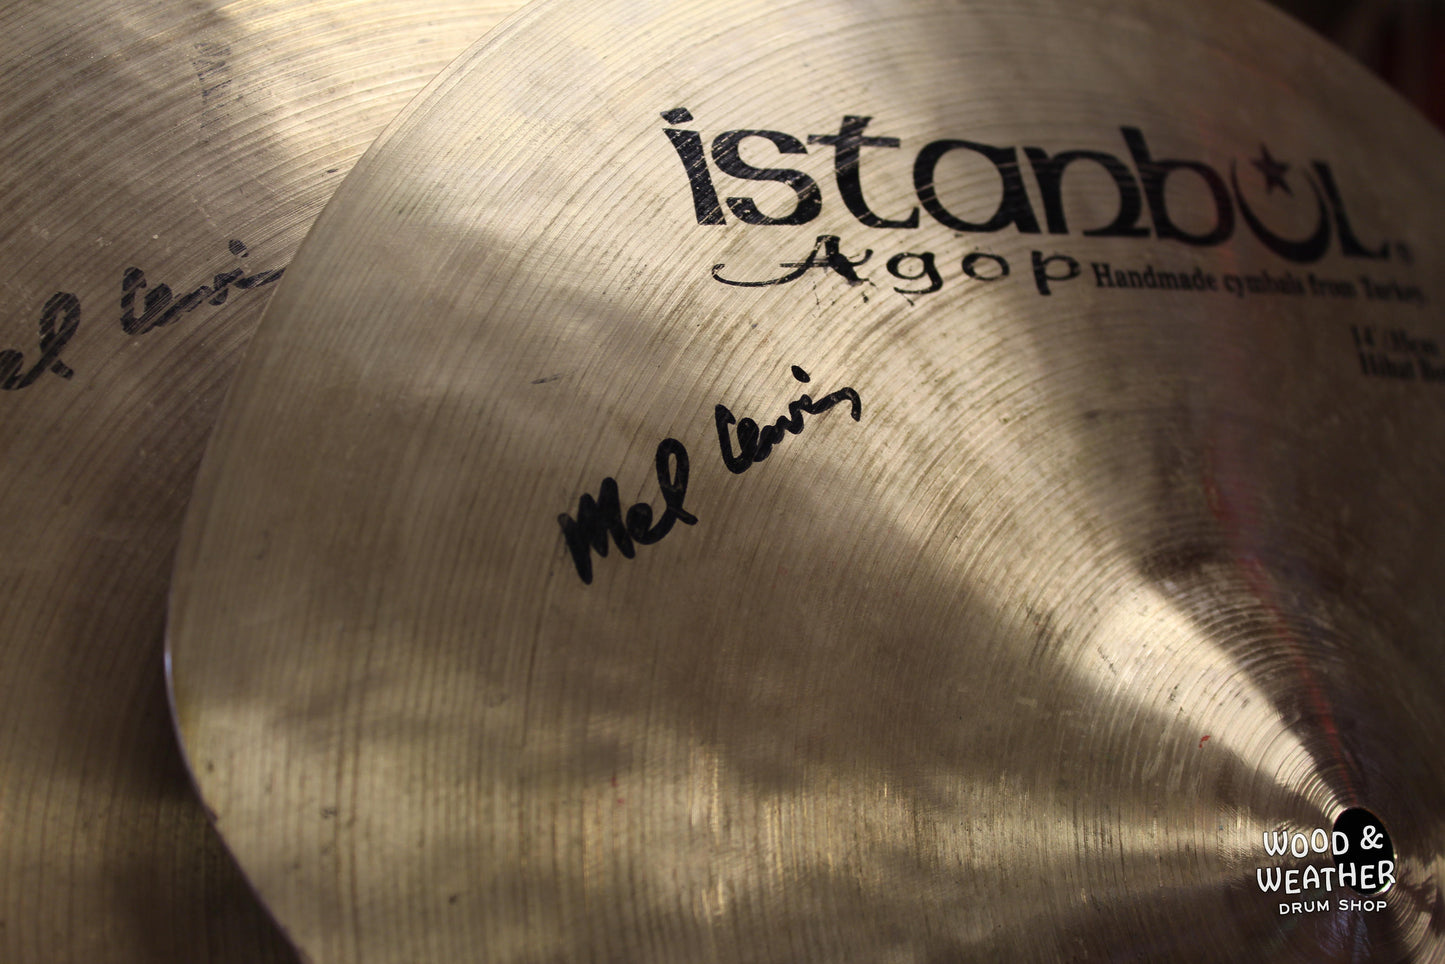 Used Istanbul Agop 14" Mel Lewis Hi-Hat Cymbals 844/1025g